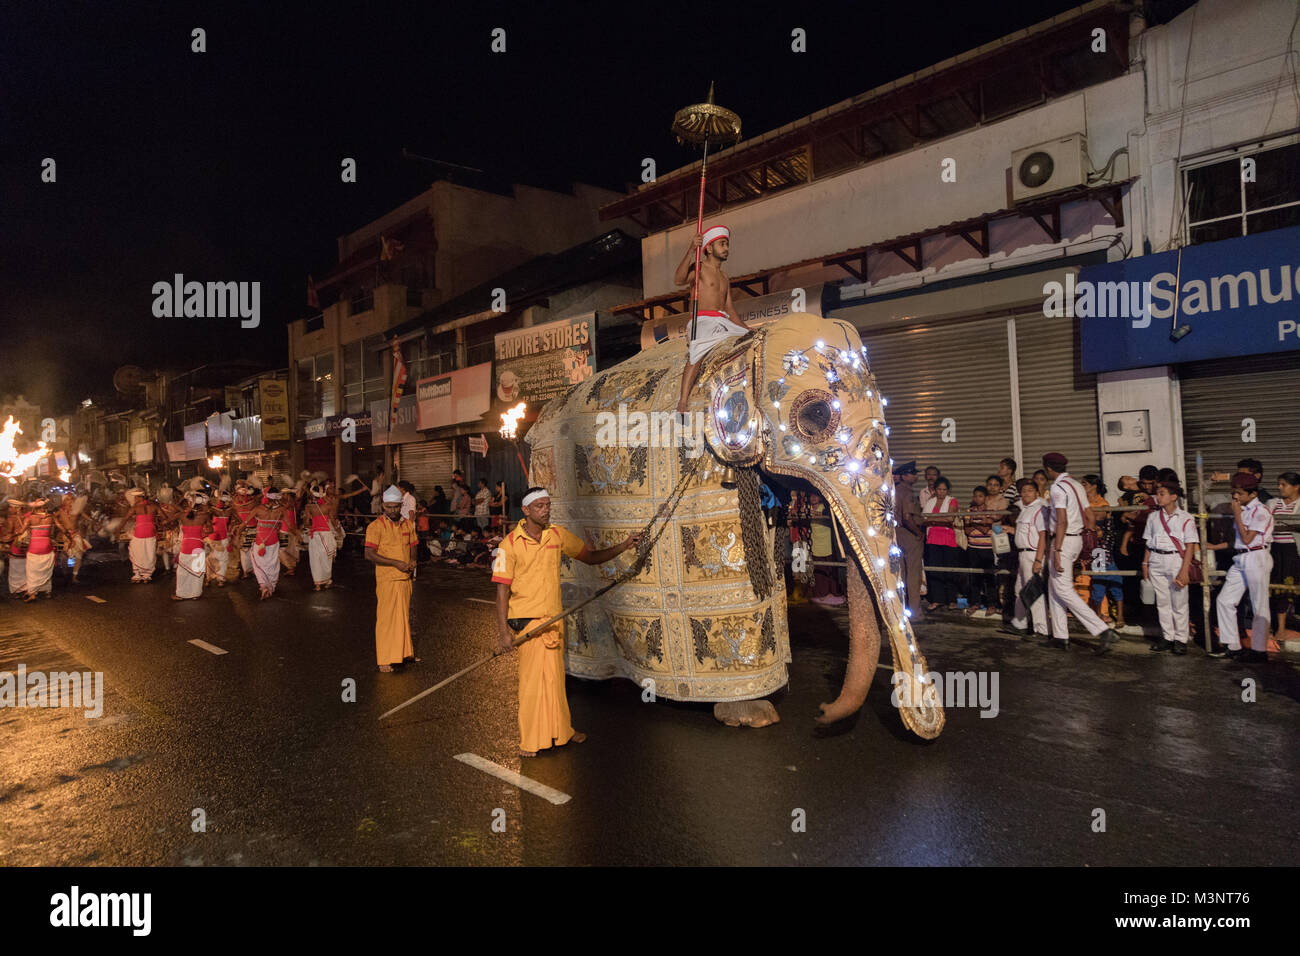 Sri Lanka Kandy Esala Perahera parade elephants costume caparison procession at night Stock Photo